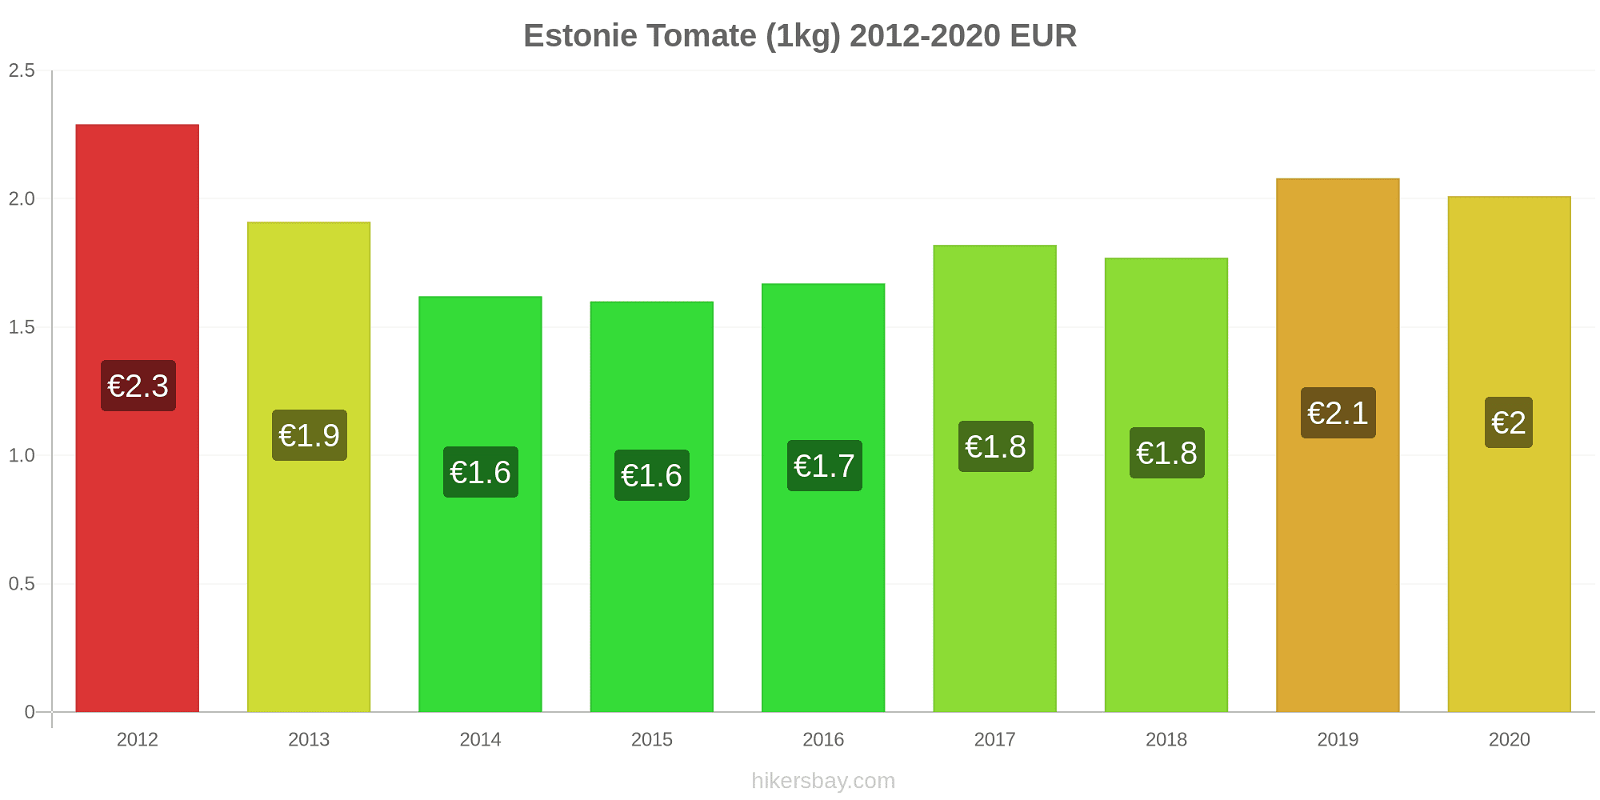 Estonie changements de prix Tomate (1kg) hikersbay.com